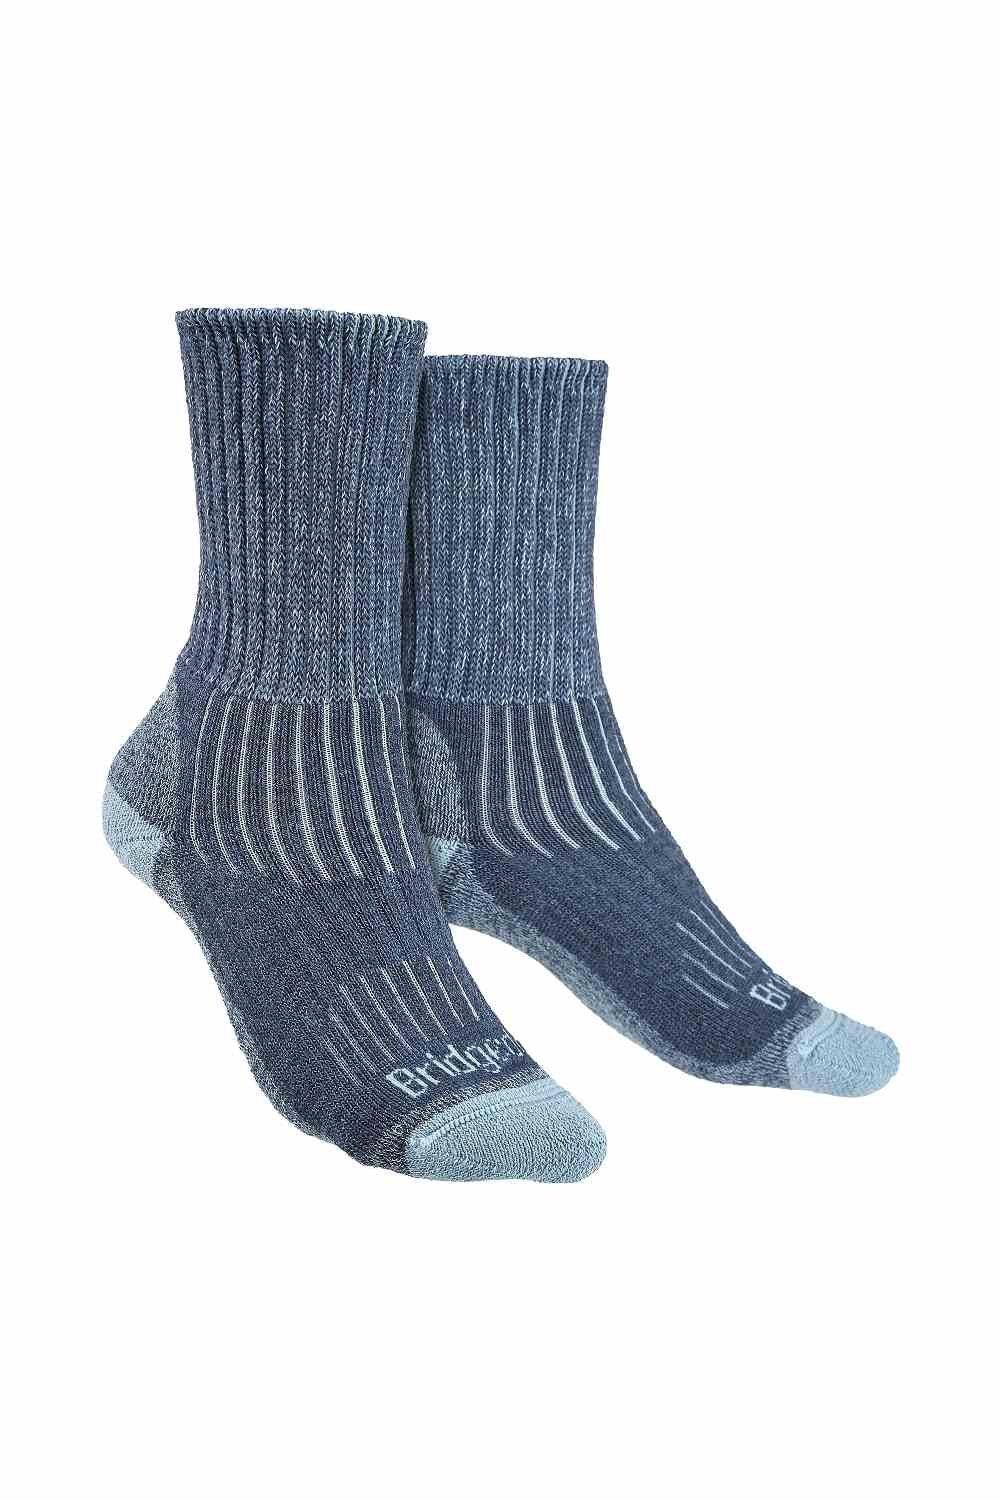 Hiking Outdoor Midweight Merino Wool Cushioned Boot Socks